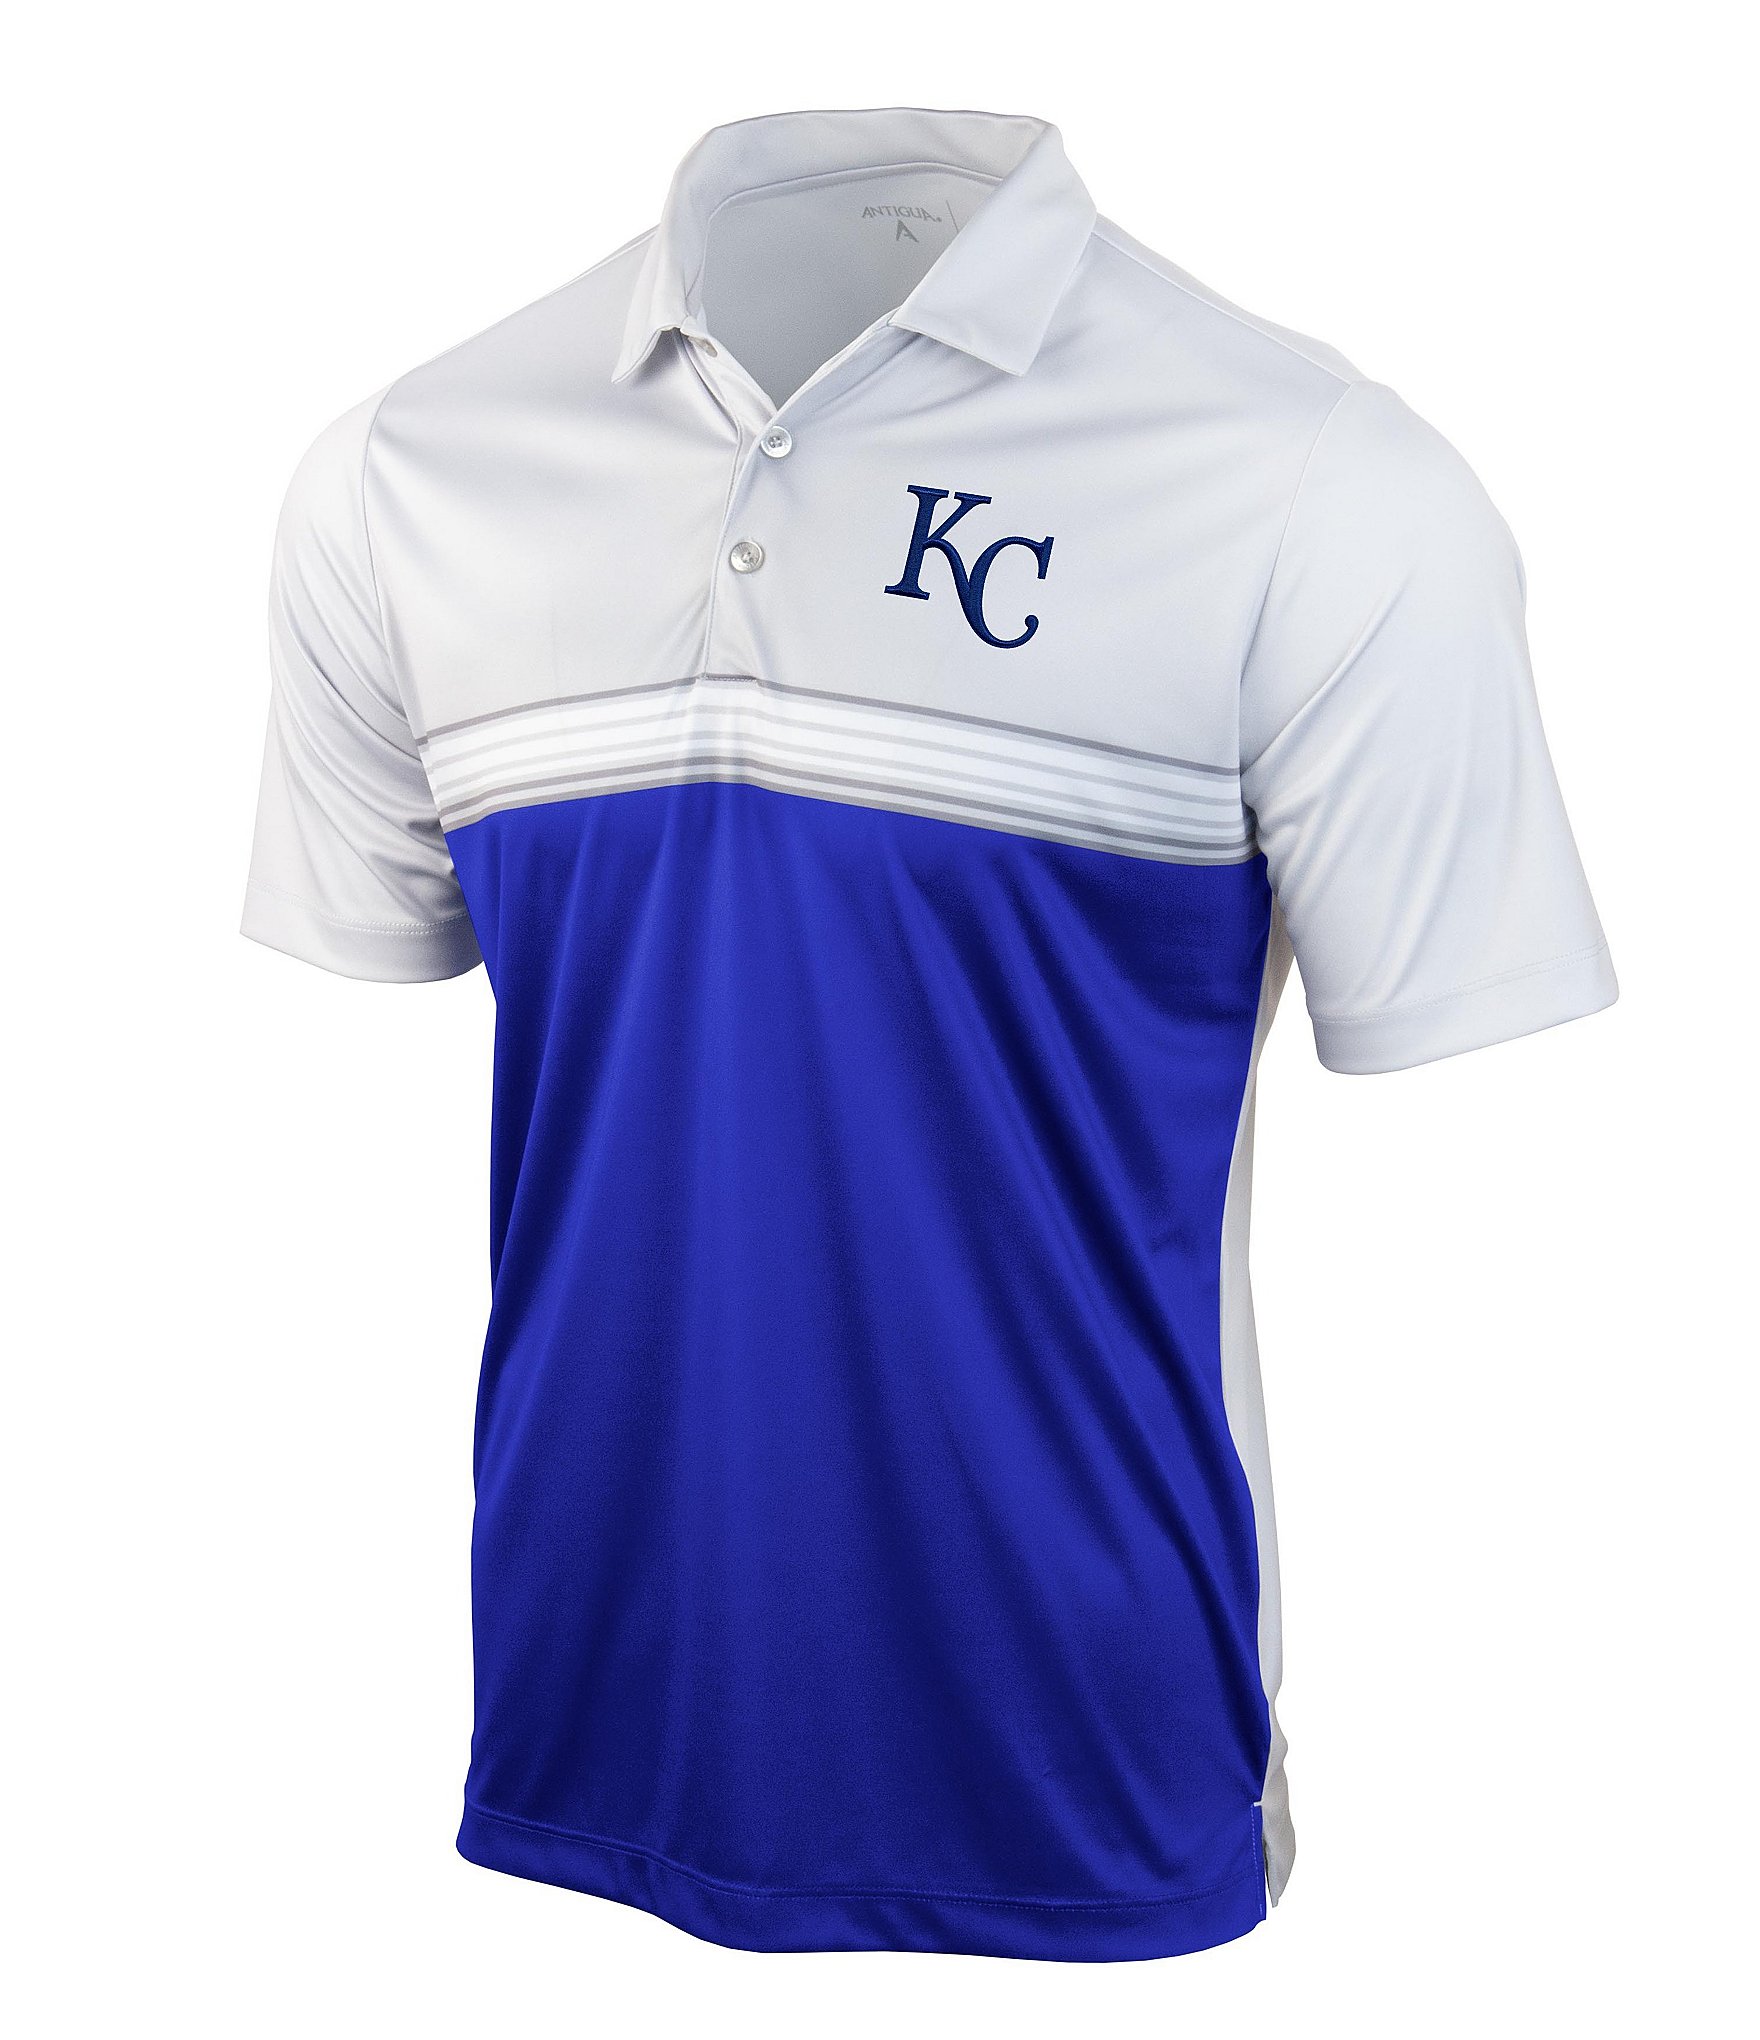 Kansas City Royals Antigua Compression Long Sleeve Button-Down Shirt -  Gray/White